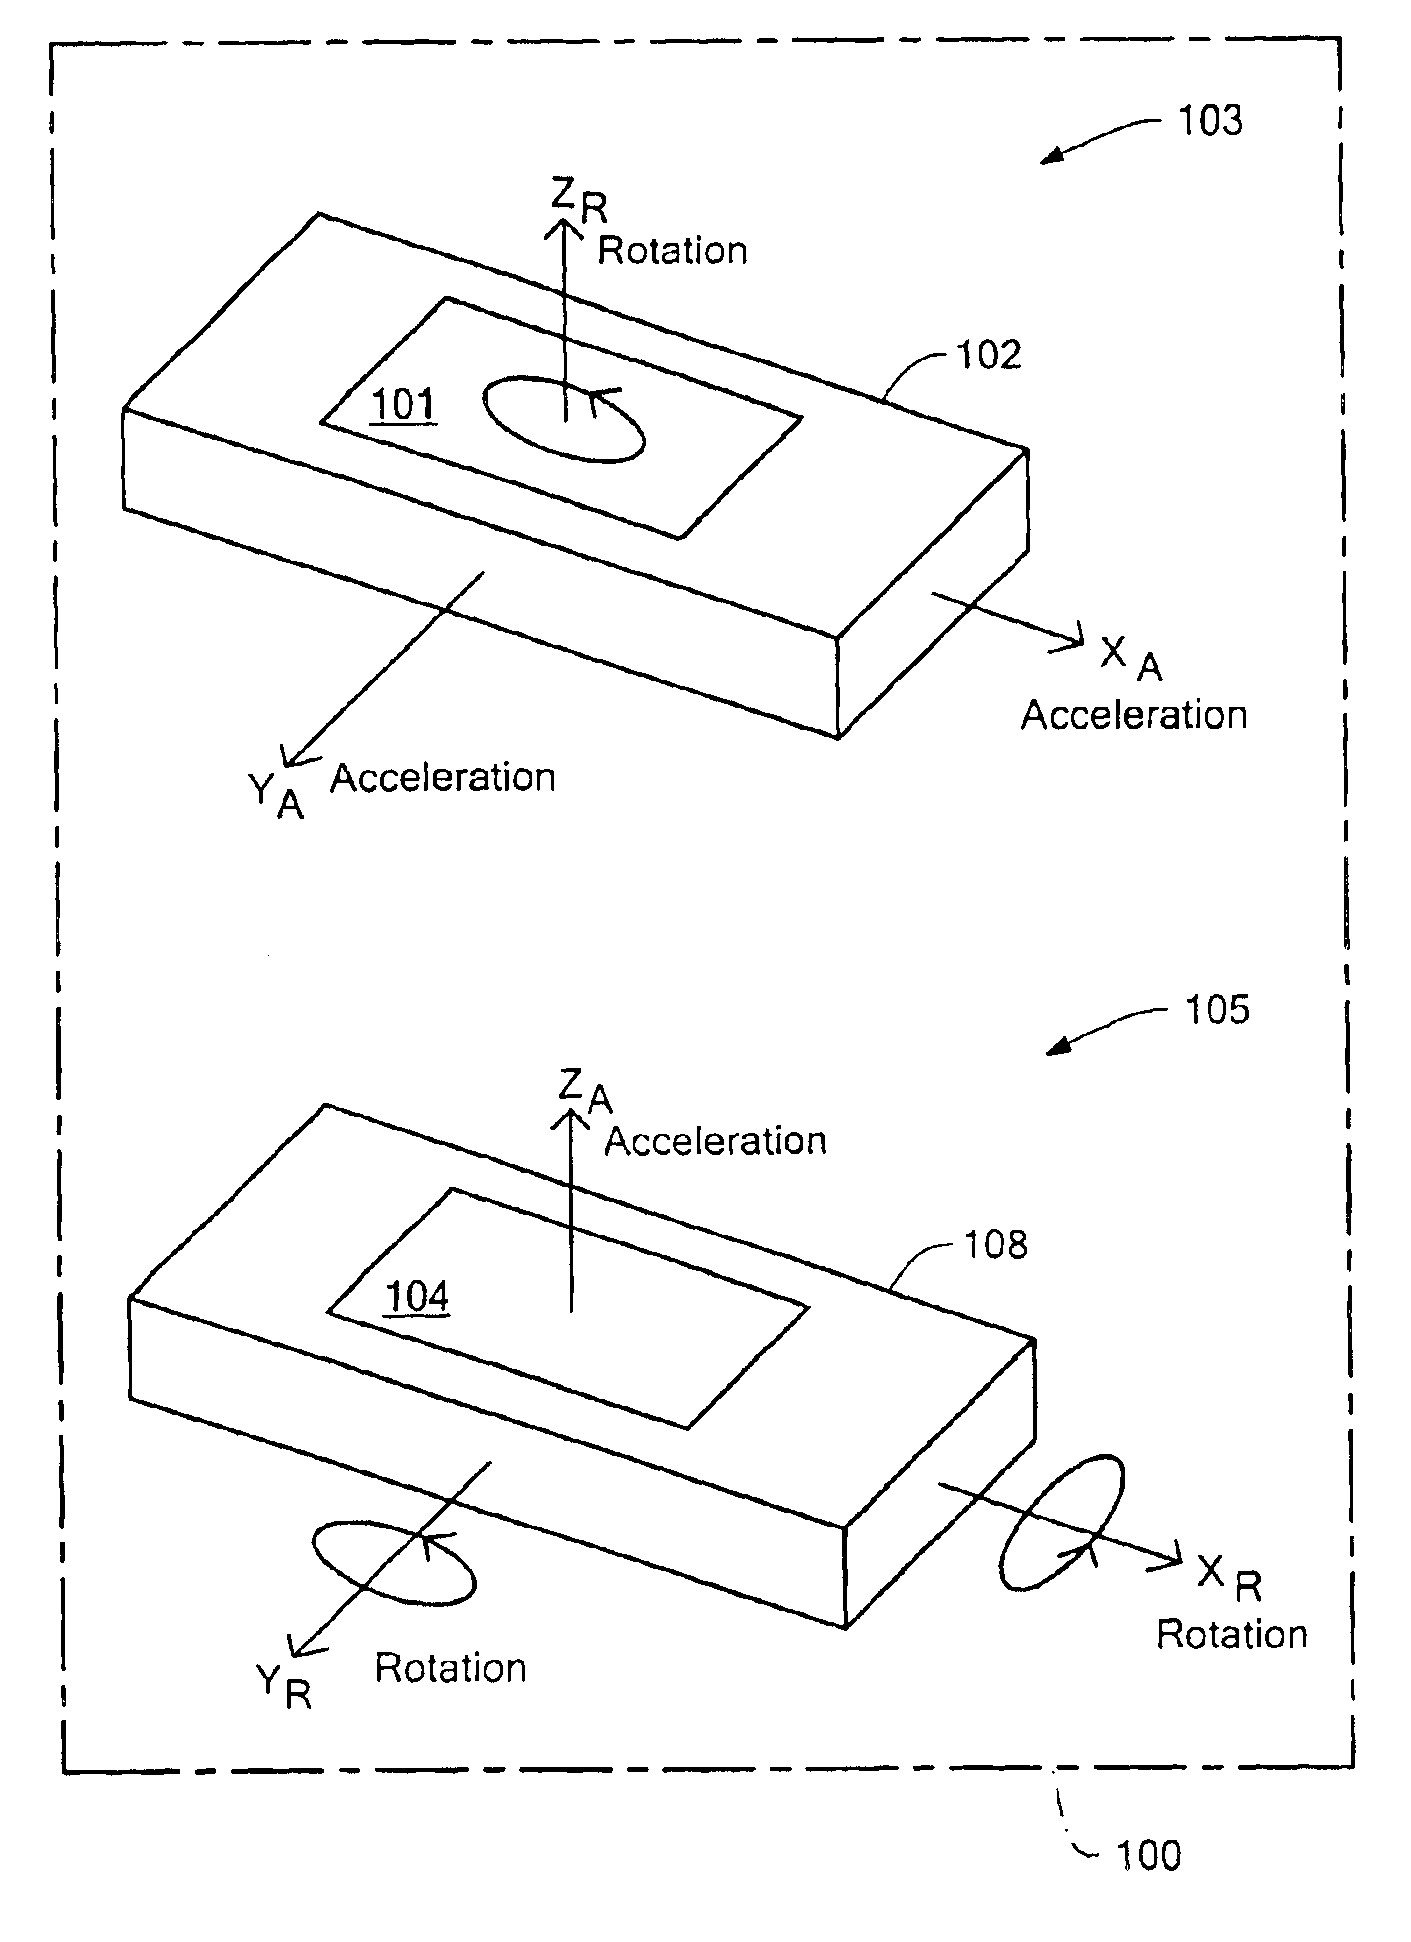 Six degree-of-freedom micro-machined multi-sensor